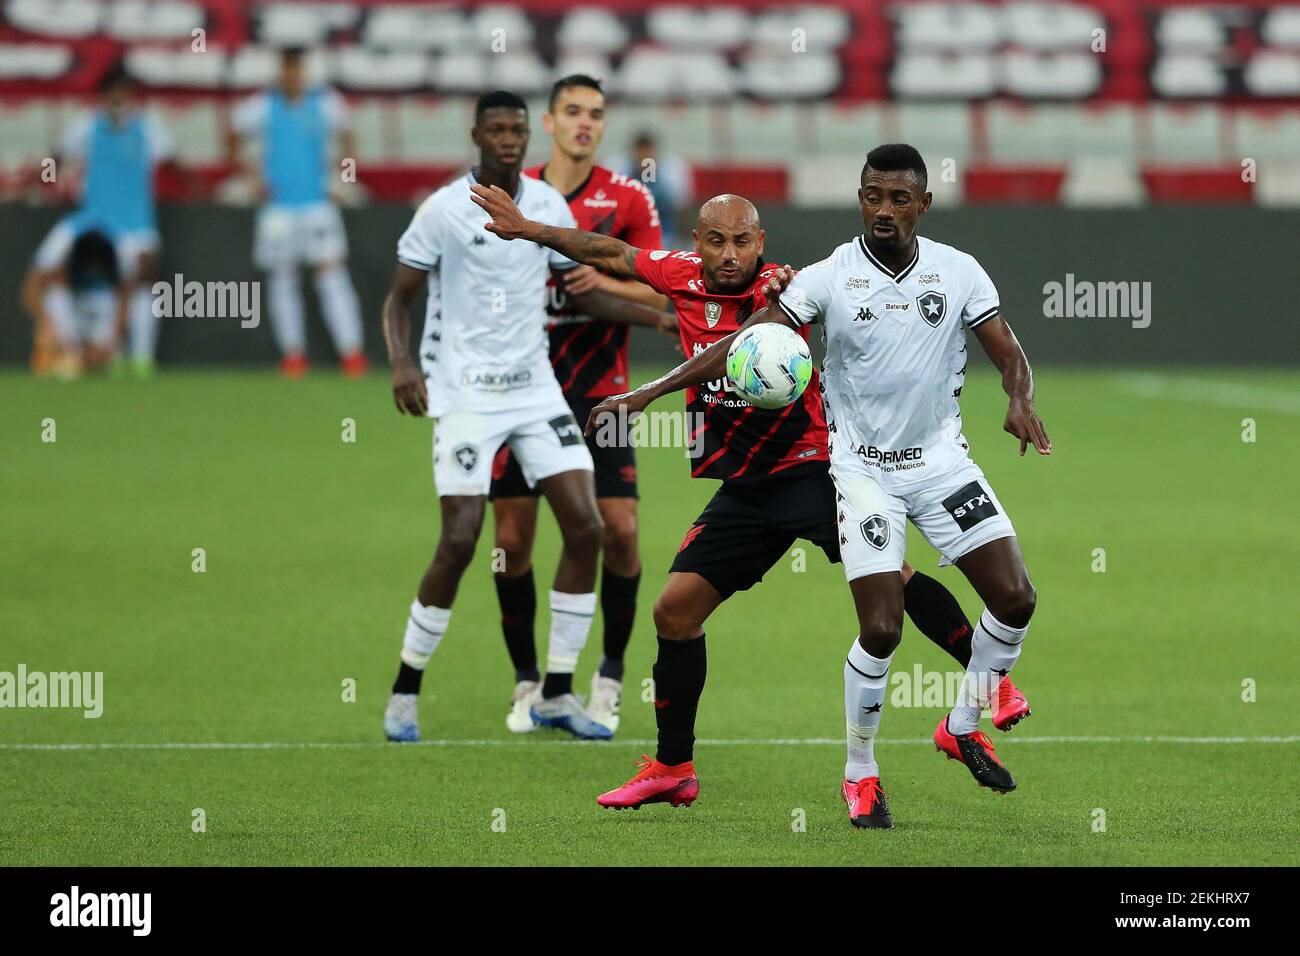 Jonathan do Athletico disputa lance com Salomon Kalou do Botafogo durante a  partida entre Athletico e